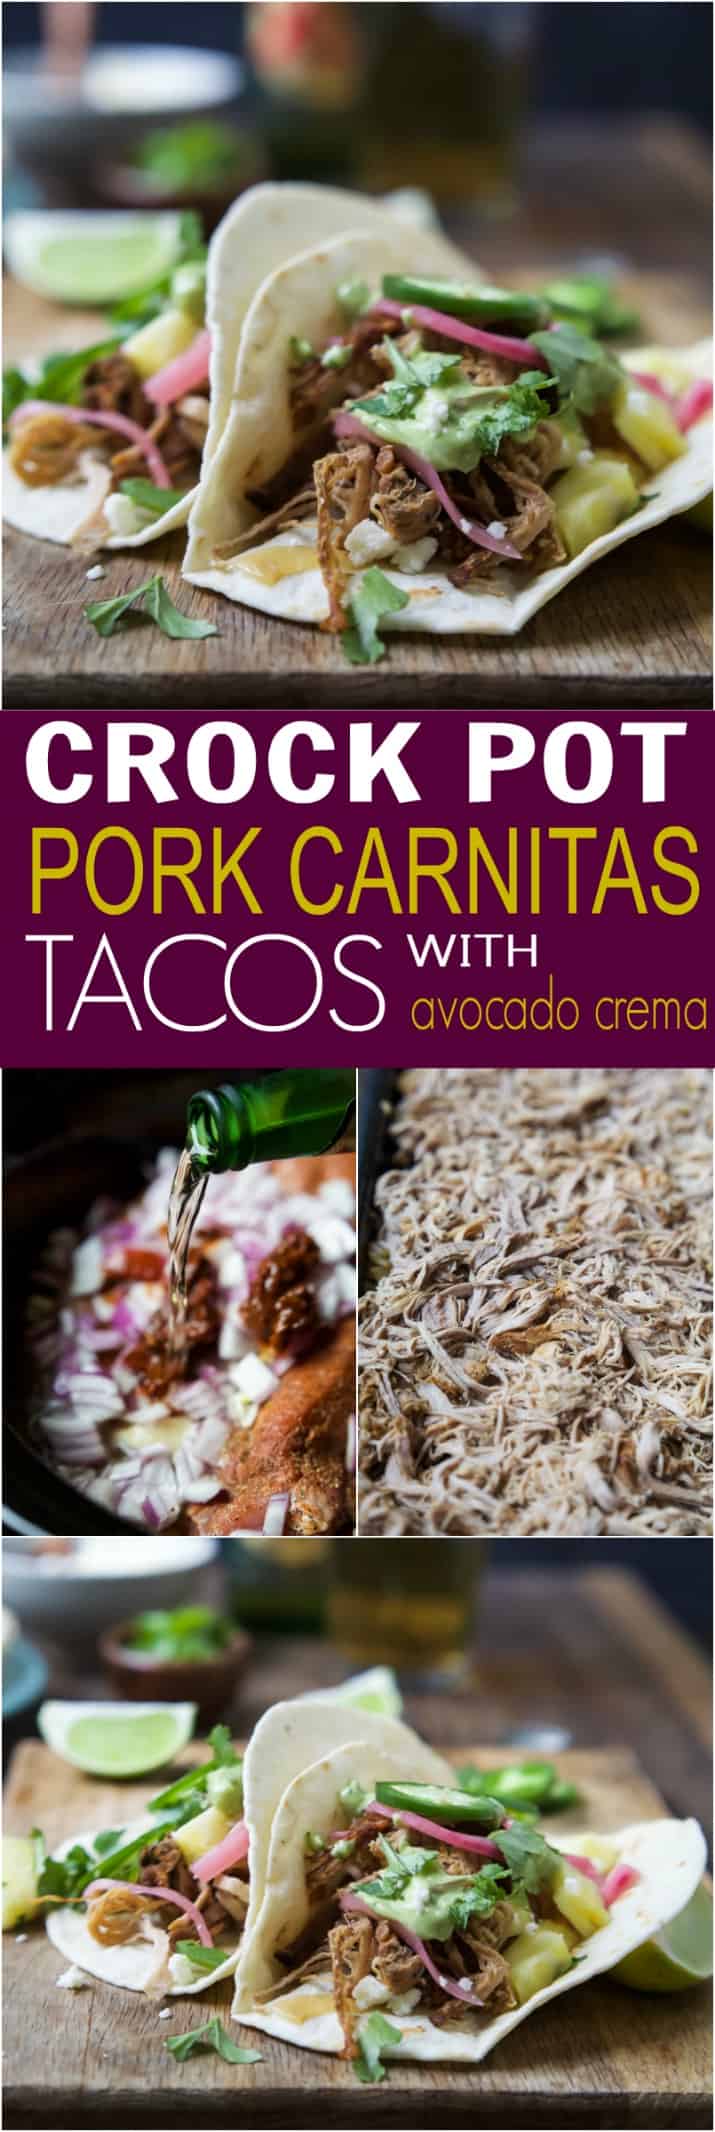 Title Image for Crock Pot Pork Carnitas Tacos with Avocado Crema, and images of pork carnitas tacos, a crock pot with pork carnitas ingredients, and shredded pork carnitas